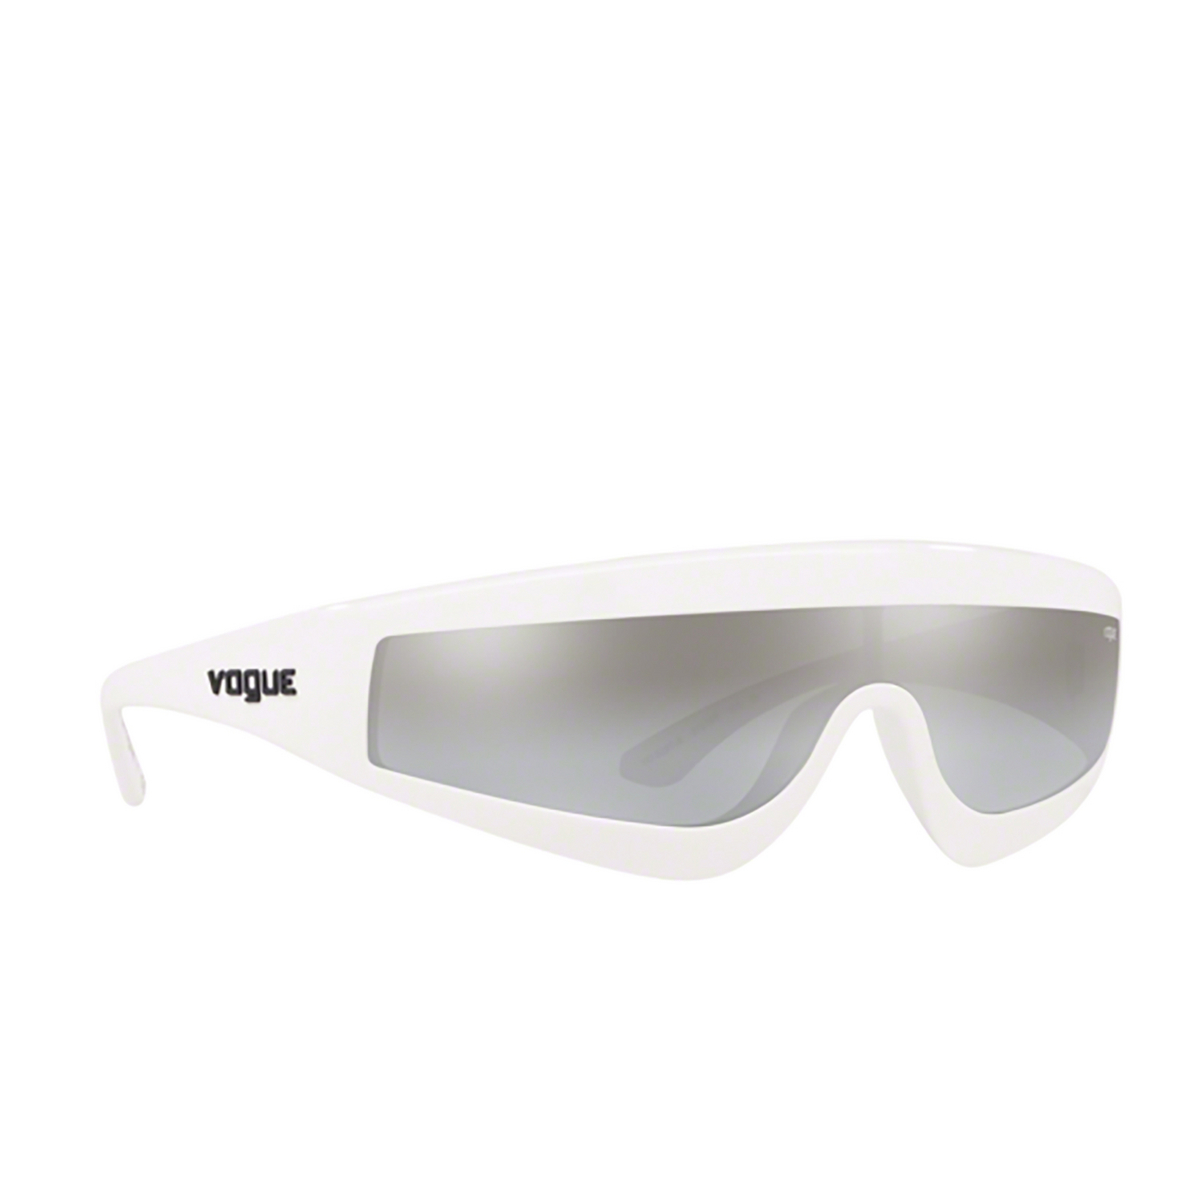 Vogue ZOOM-IN Sunglasses 27216V White - three-quarters view